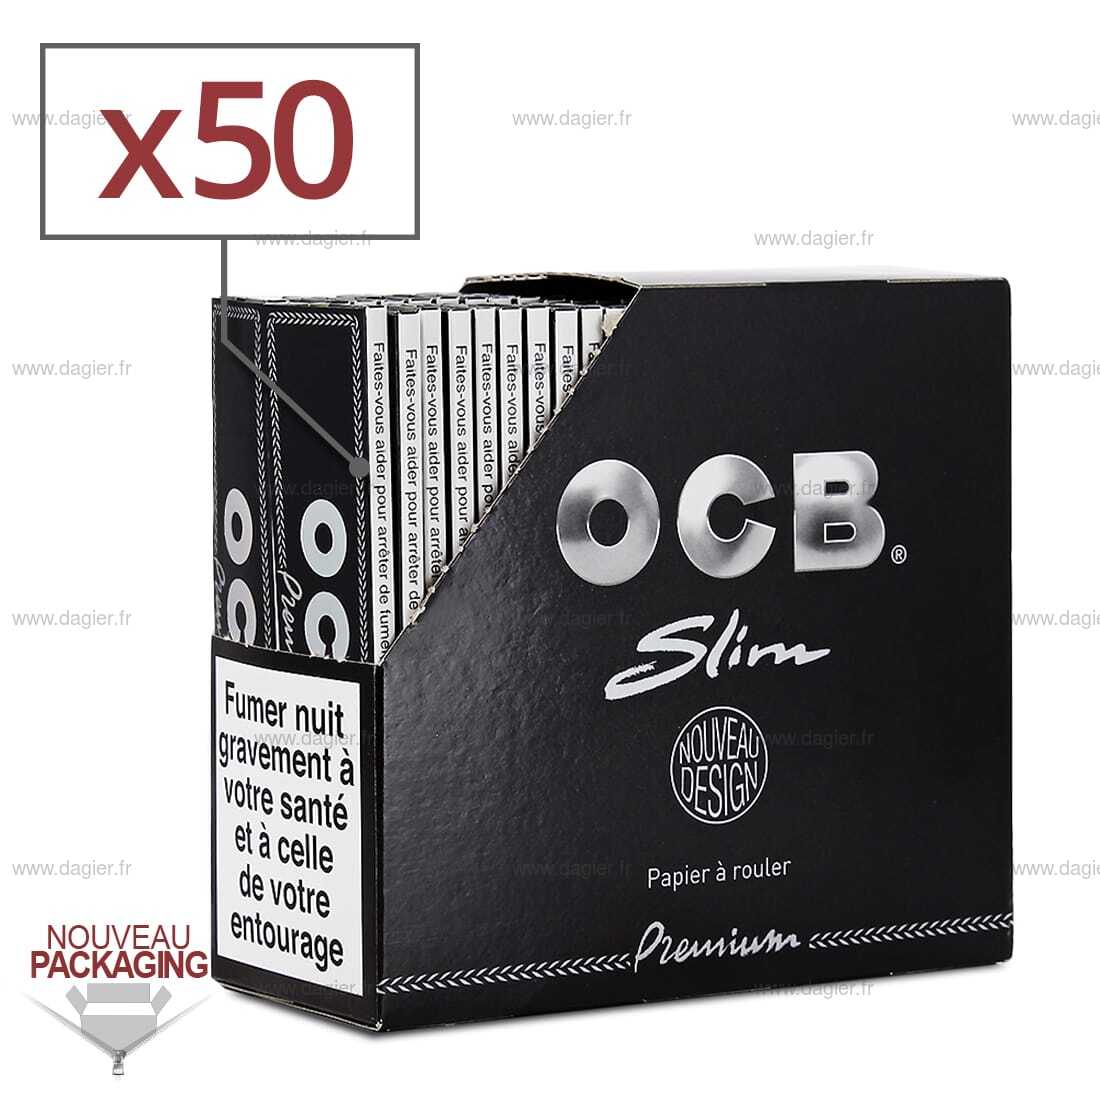 OCB SLIM X 50 CARNET